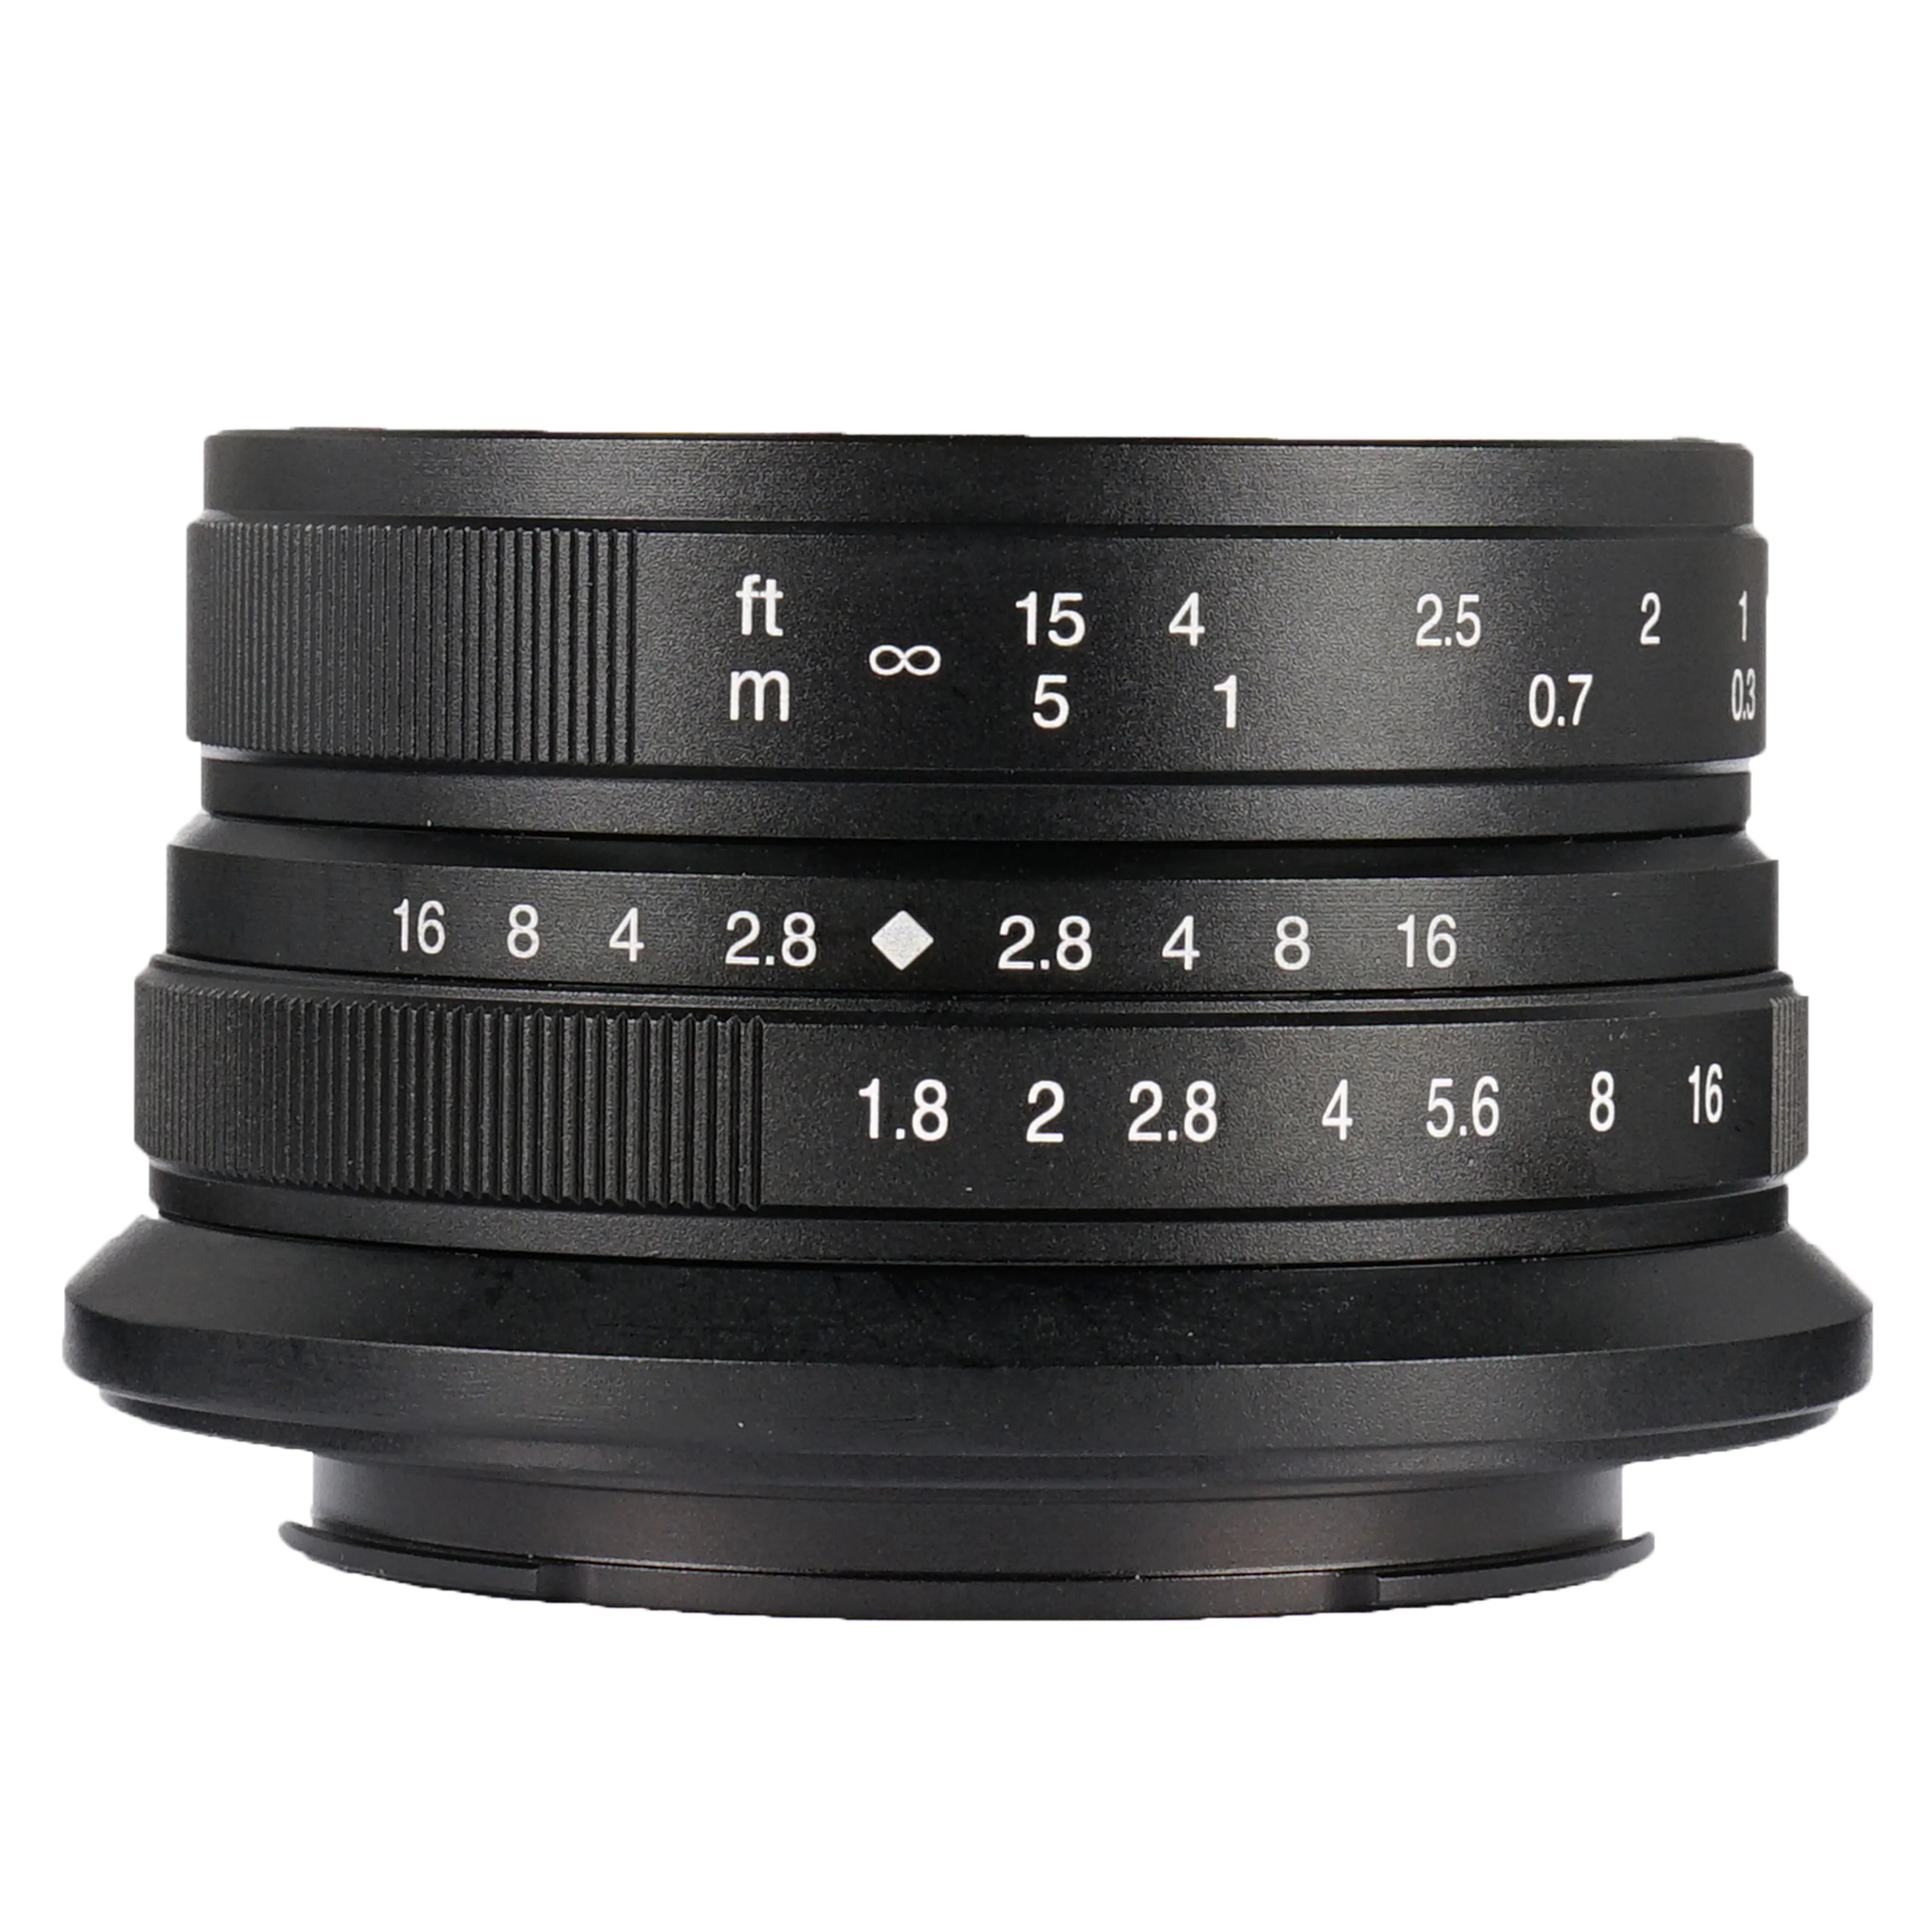 7Artisans 25mm F 1.8 Prime Lens APS-C Black FE Mount For <span class=keywords><strong>Sony</strong></span> A7 A7II A7R A7RII A7S A7SII A7III A6100 A6300 A6000 A6400 A6500A66